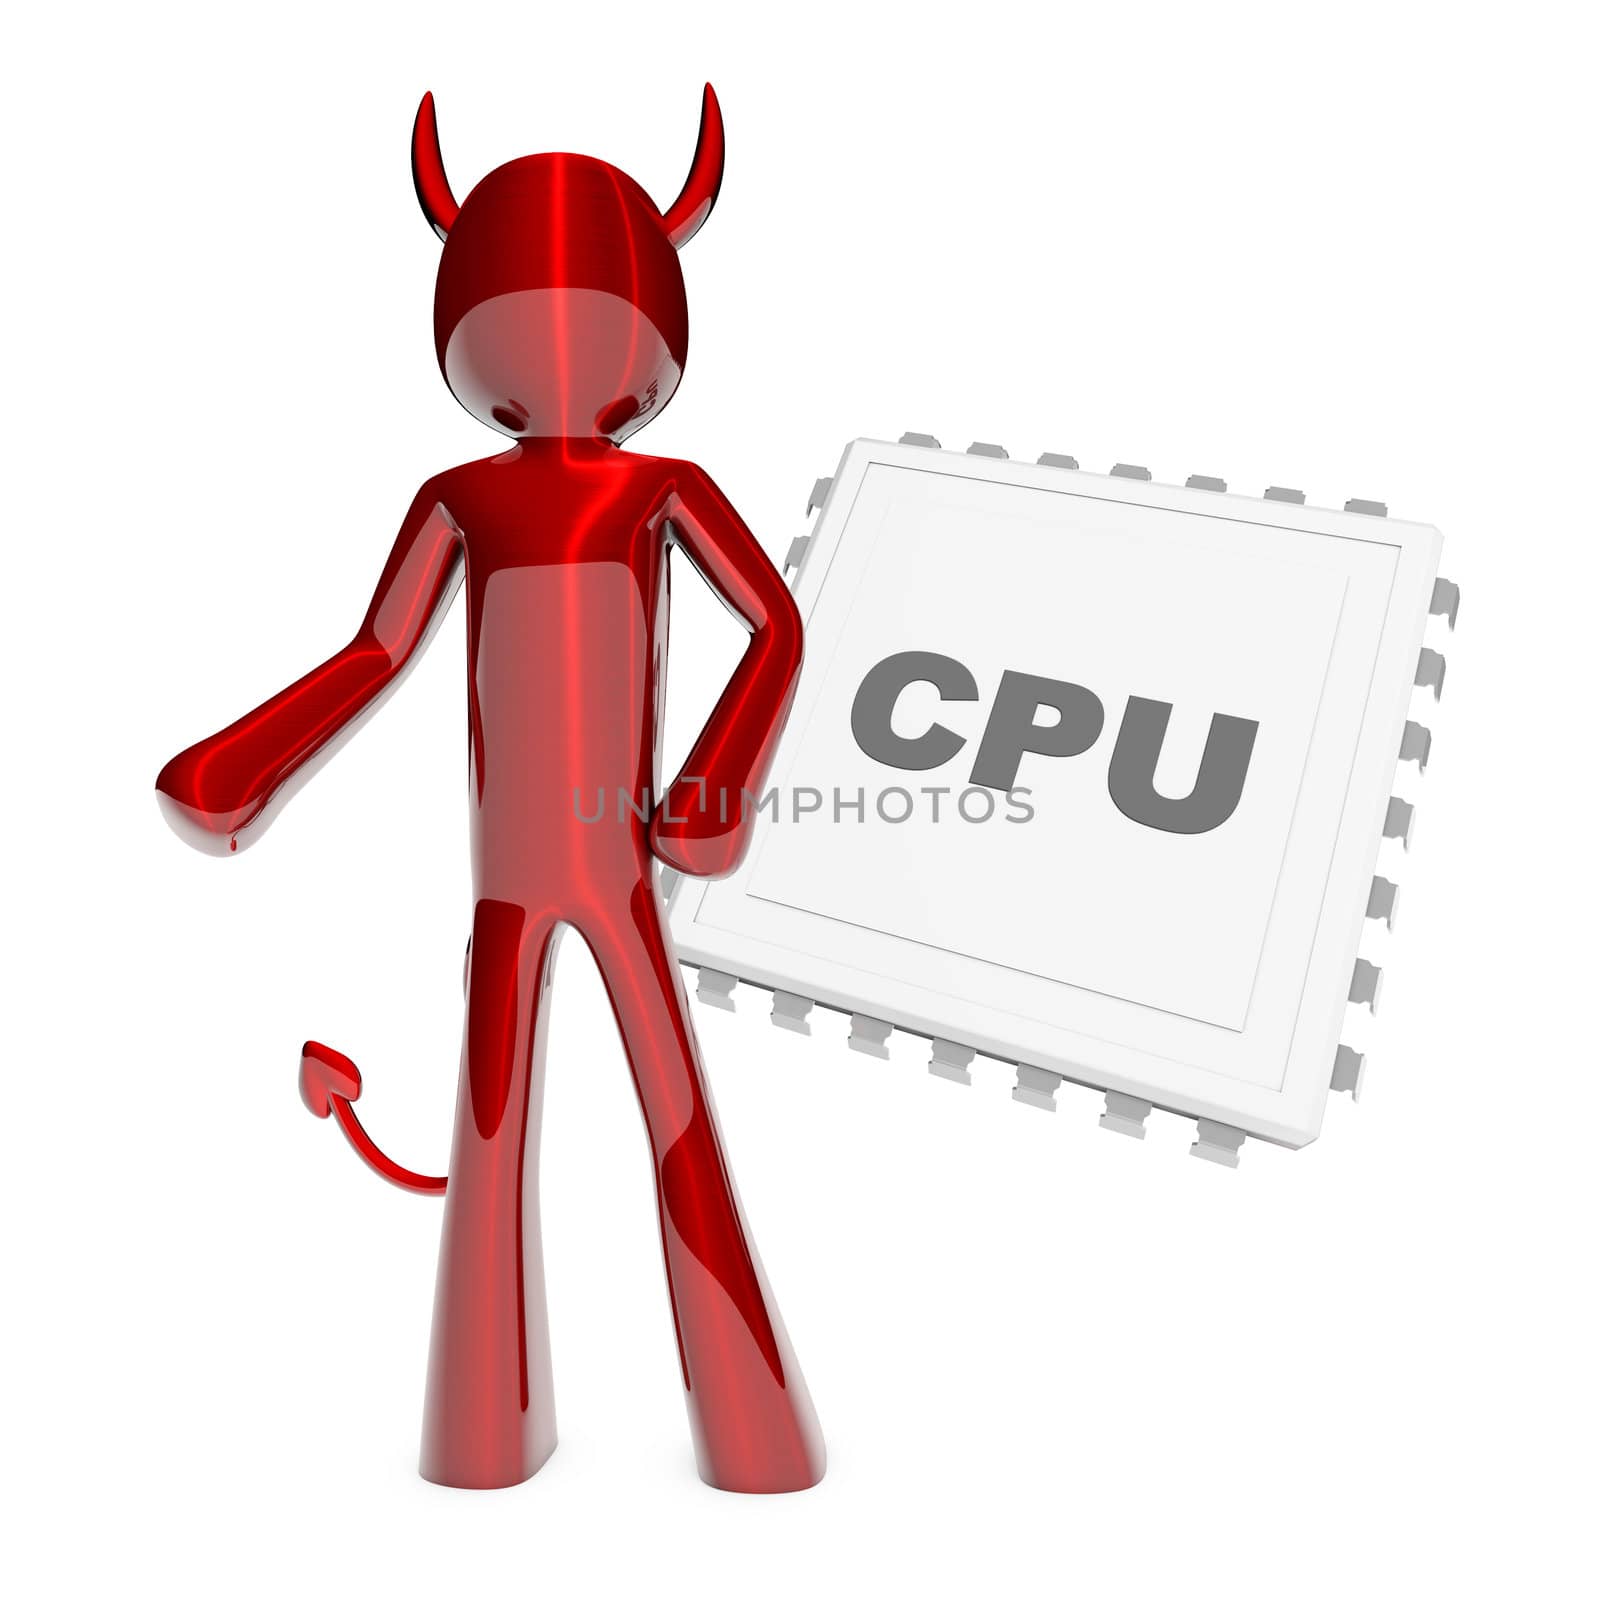 A little CPU Devil/Daemon. 3D rendered Illustration. Isolated on white.